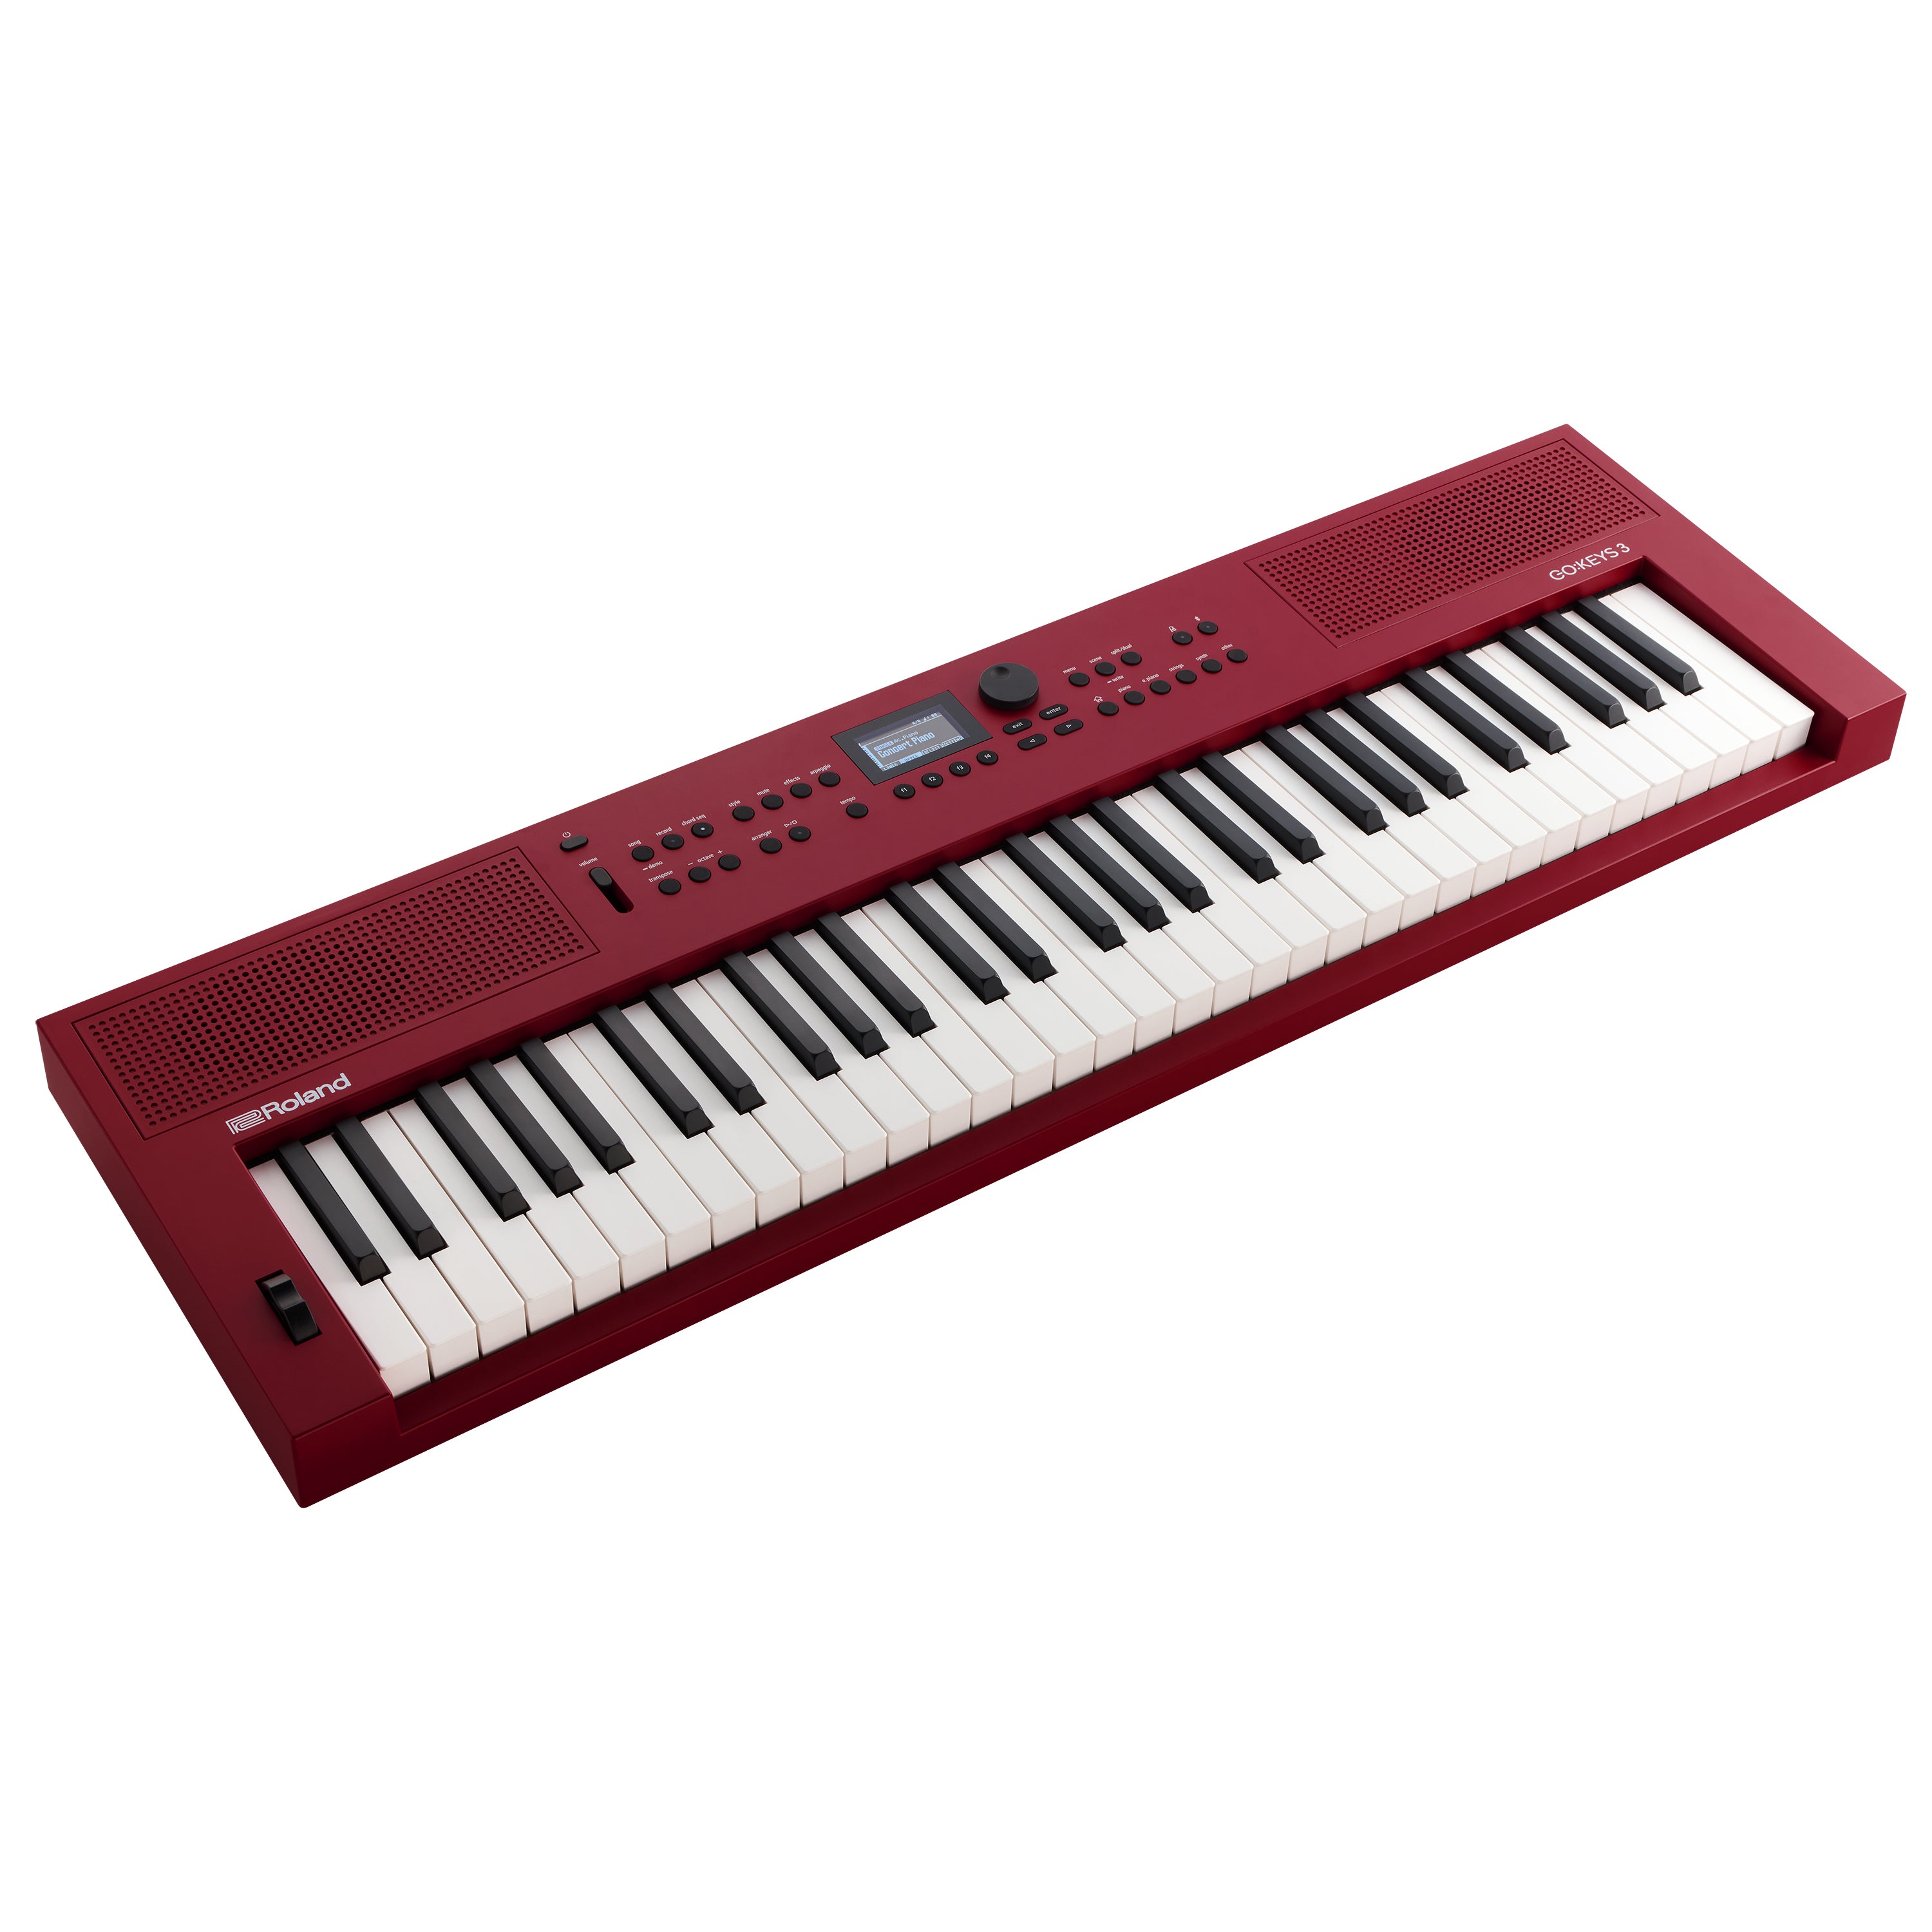 Roland GoKeys 3 Music Creation Keyboard - Red, View 1